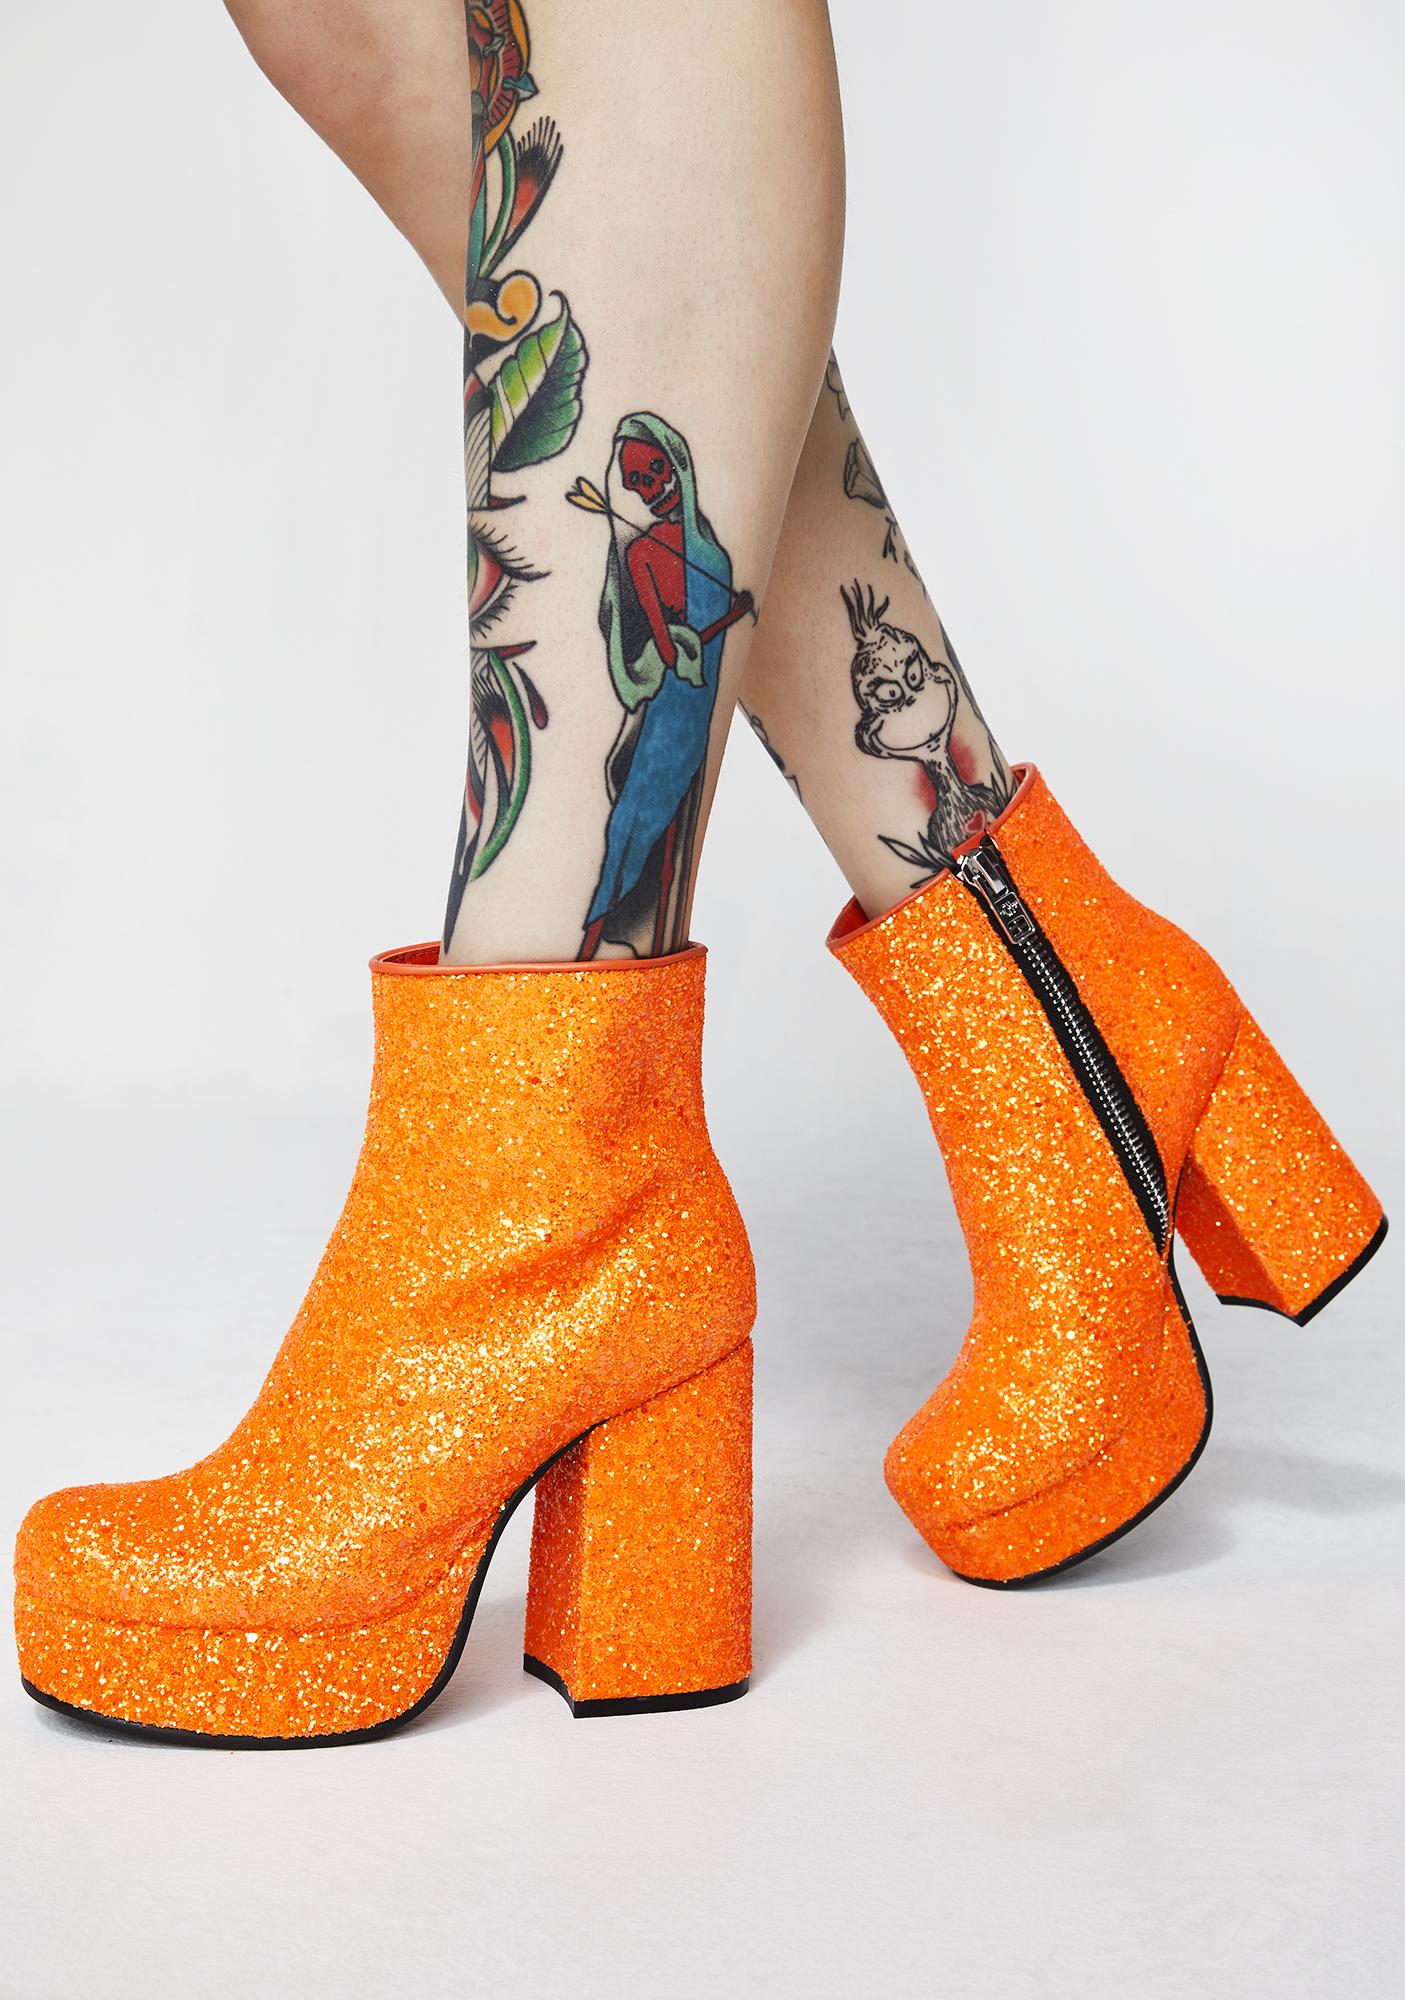 sparkle glitter boots